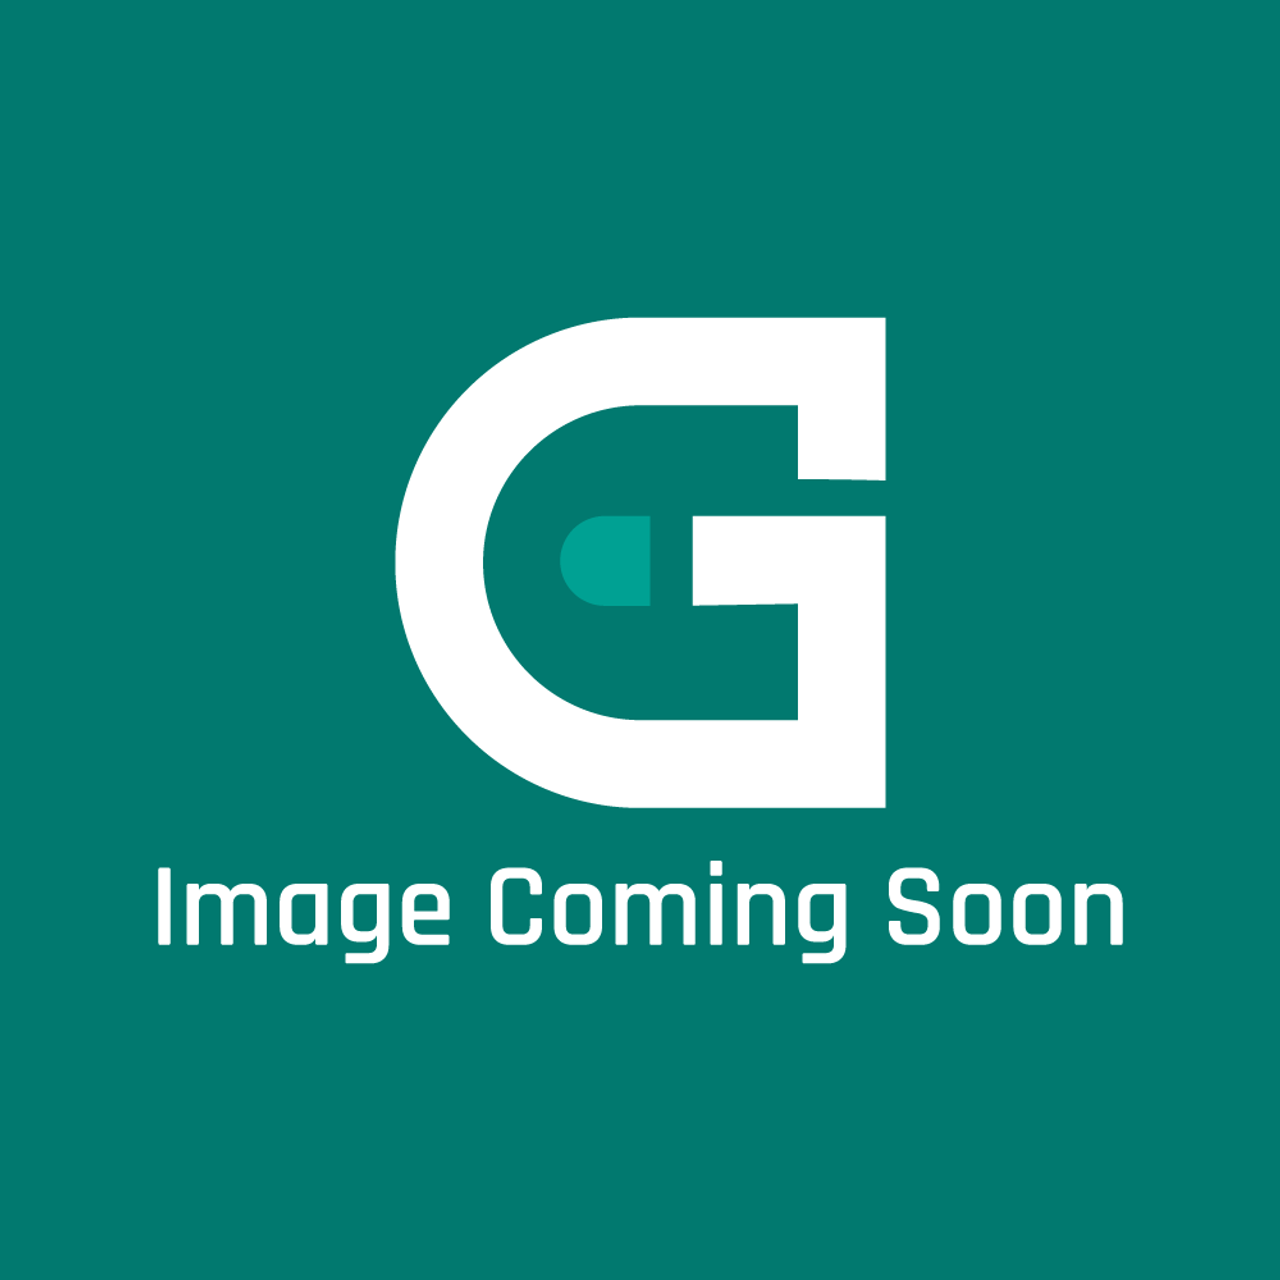 Blodgett 51568 - Kit, Chip Update, Bcx14 Series - Image Coming Soon!